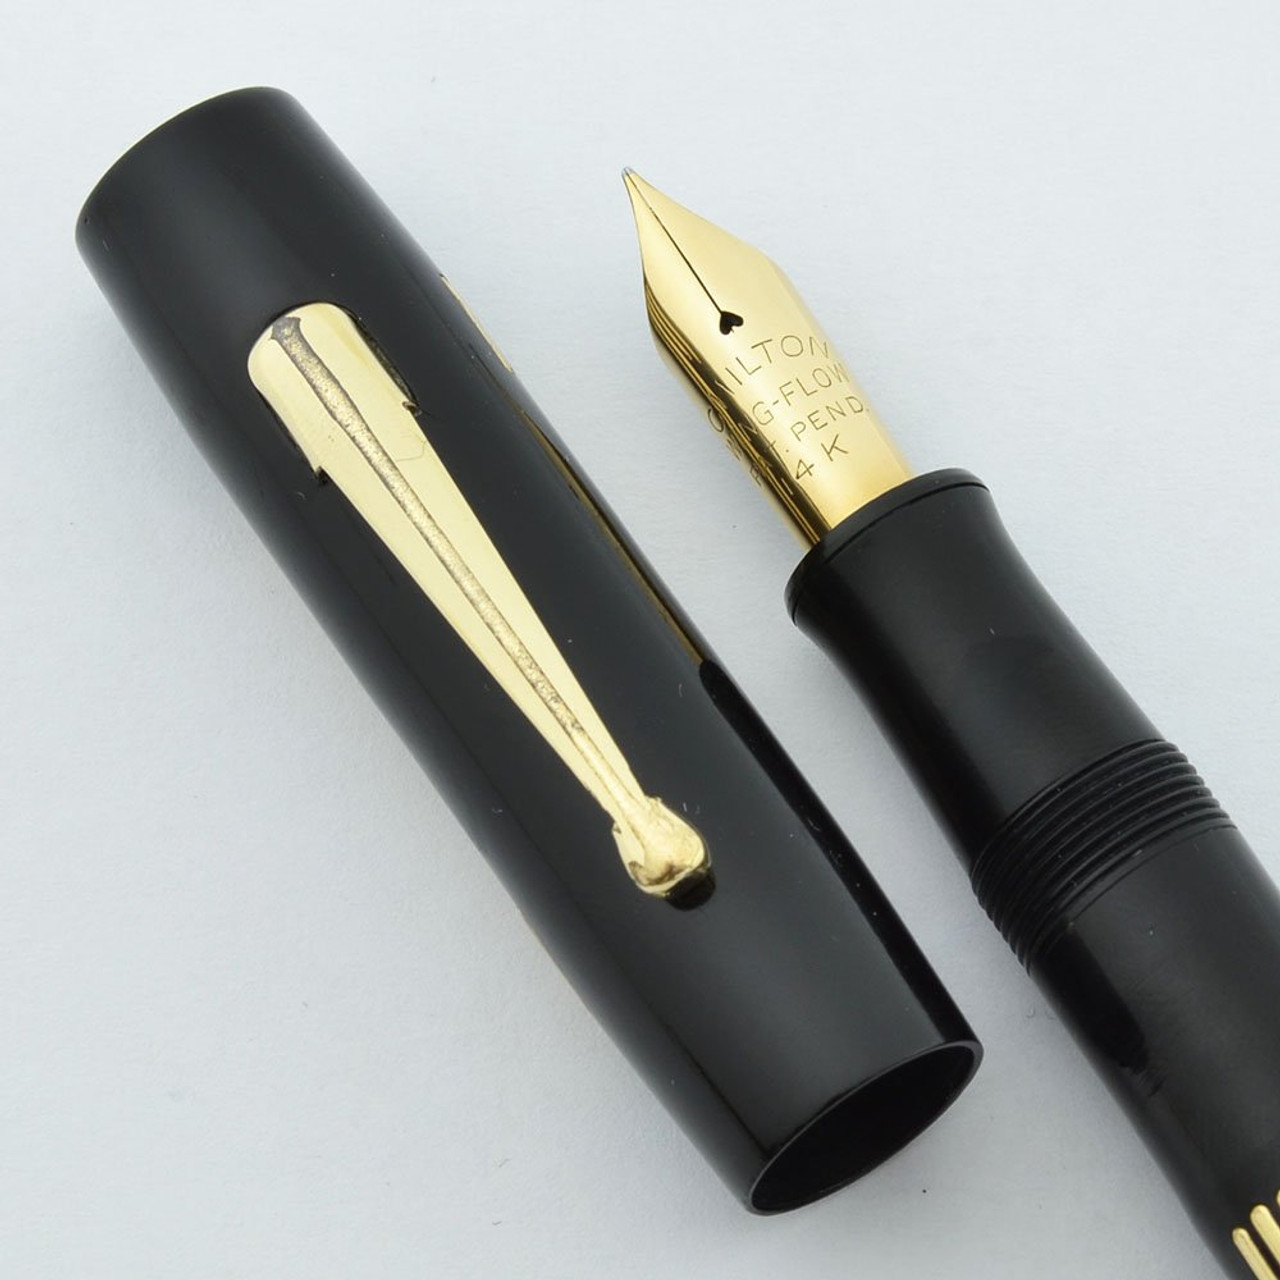 Chilton Wing-Flow Fountain Pen - Full Size, N Inlay Design, Black, Fine Flex Nib (Excellent +, Restored)